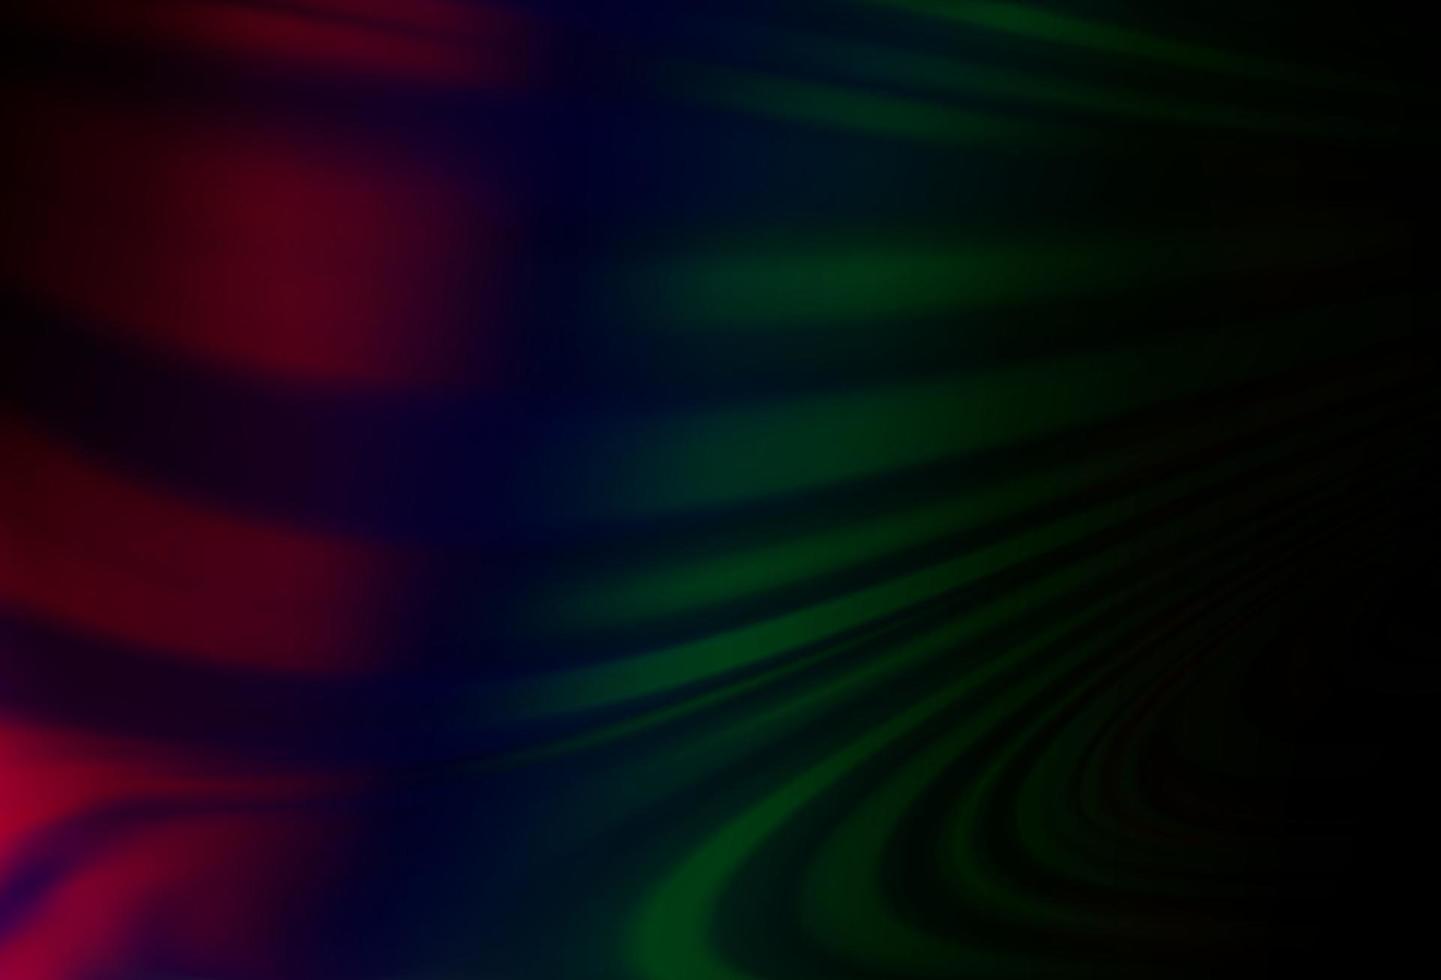 modelo de vetor de arco-íris multicolorido escuro com formas de bolha.